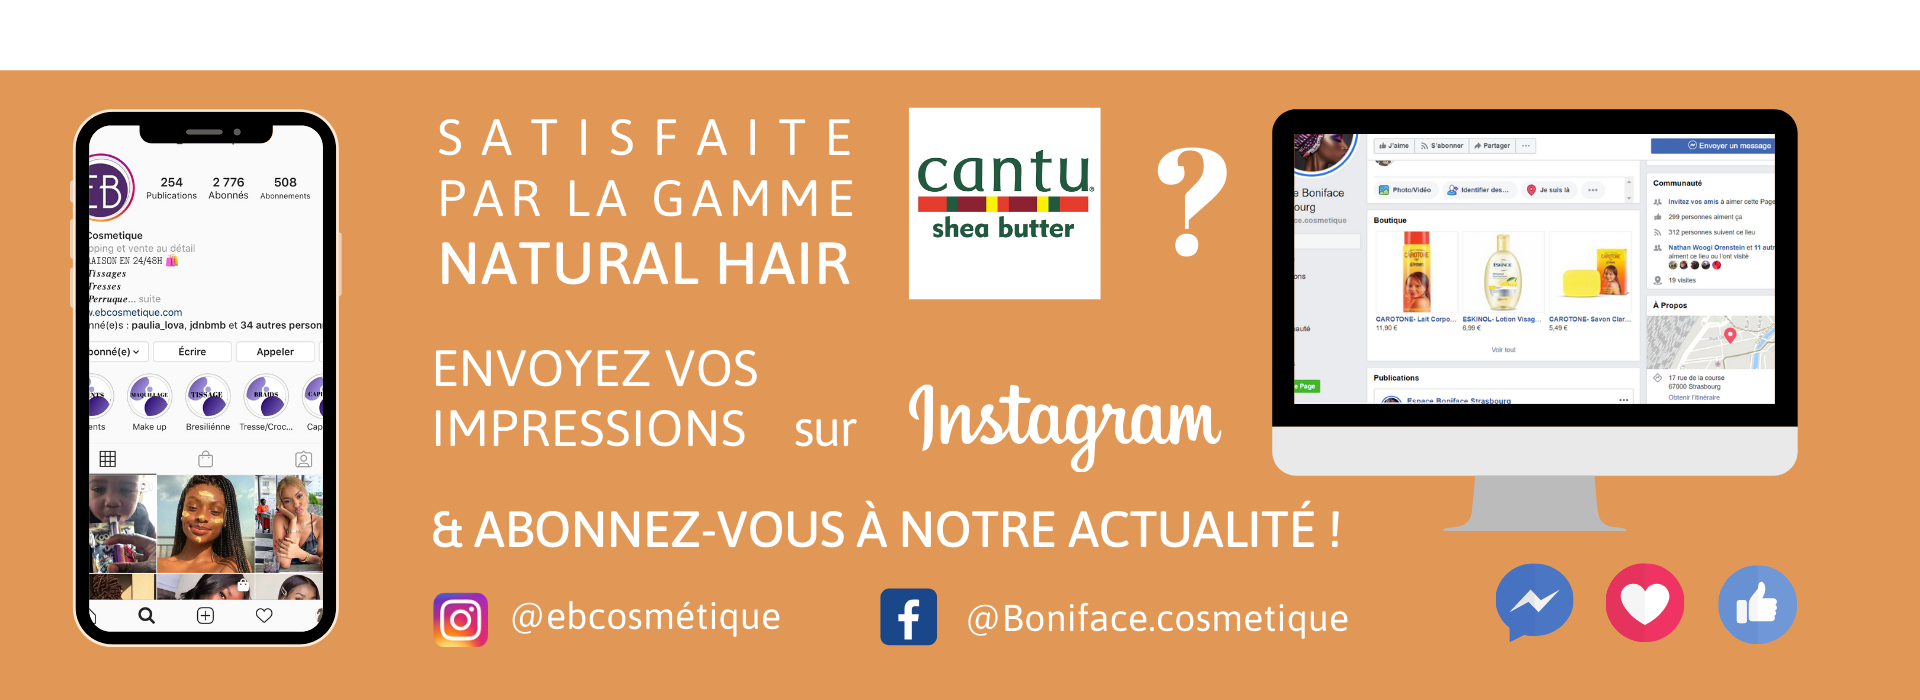 fiche produit ebcosmetique cantu shea butter natural hair complete conditioning co-wash routine capillaire afro bouclé facebook instagram